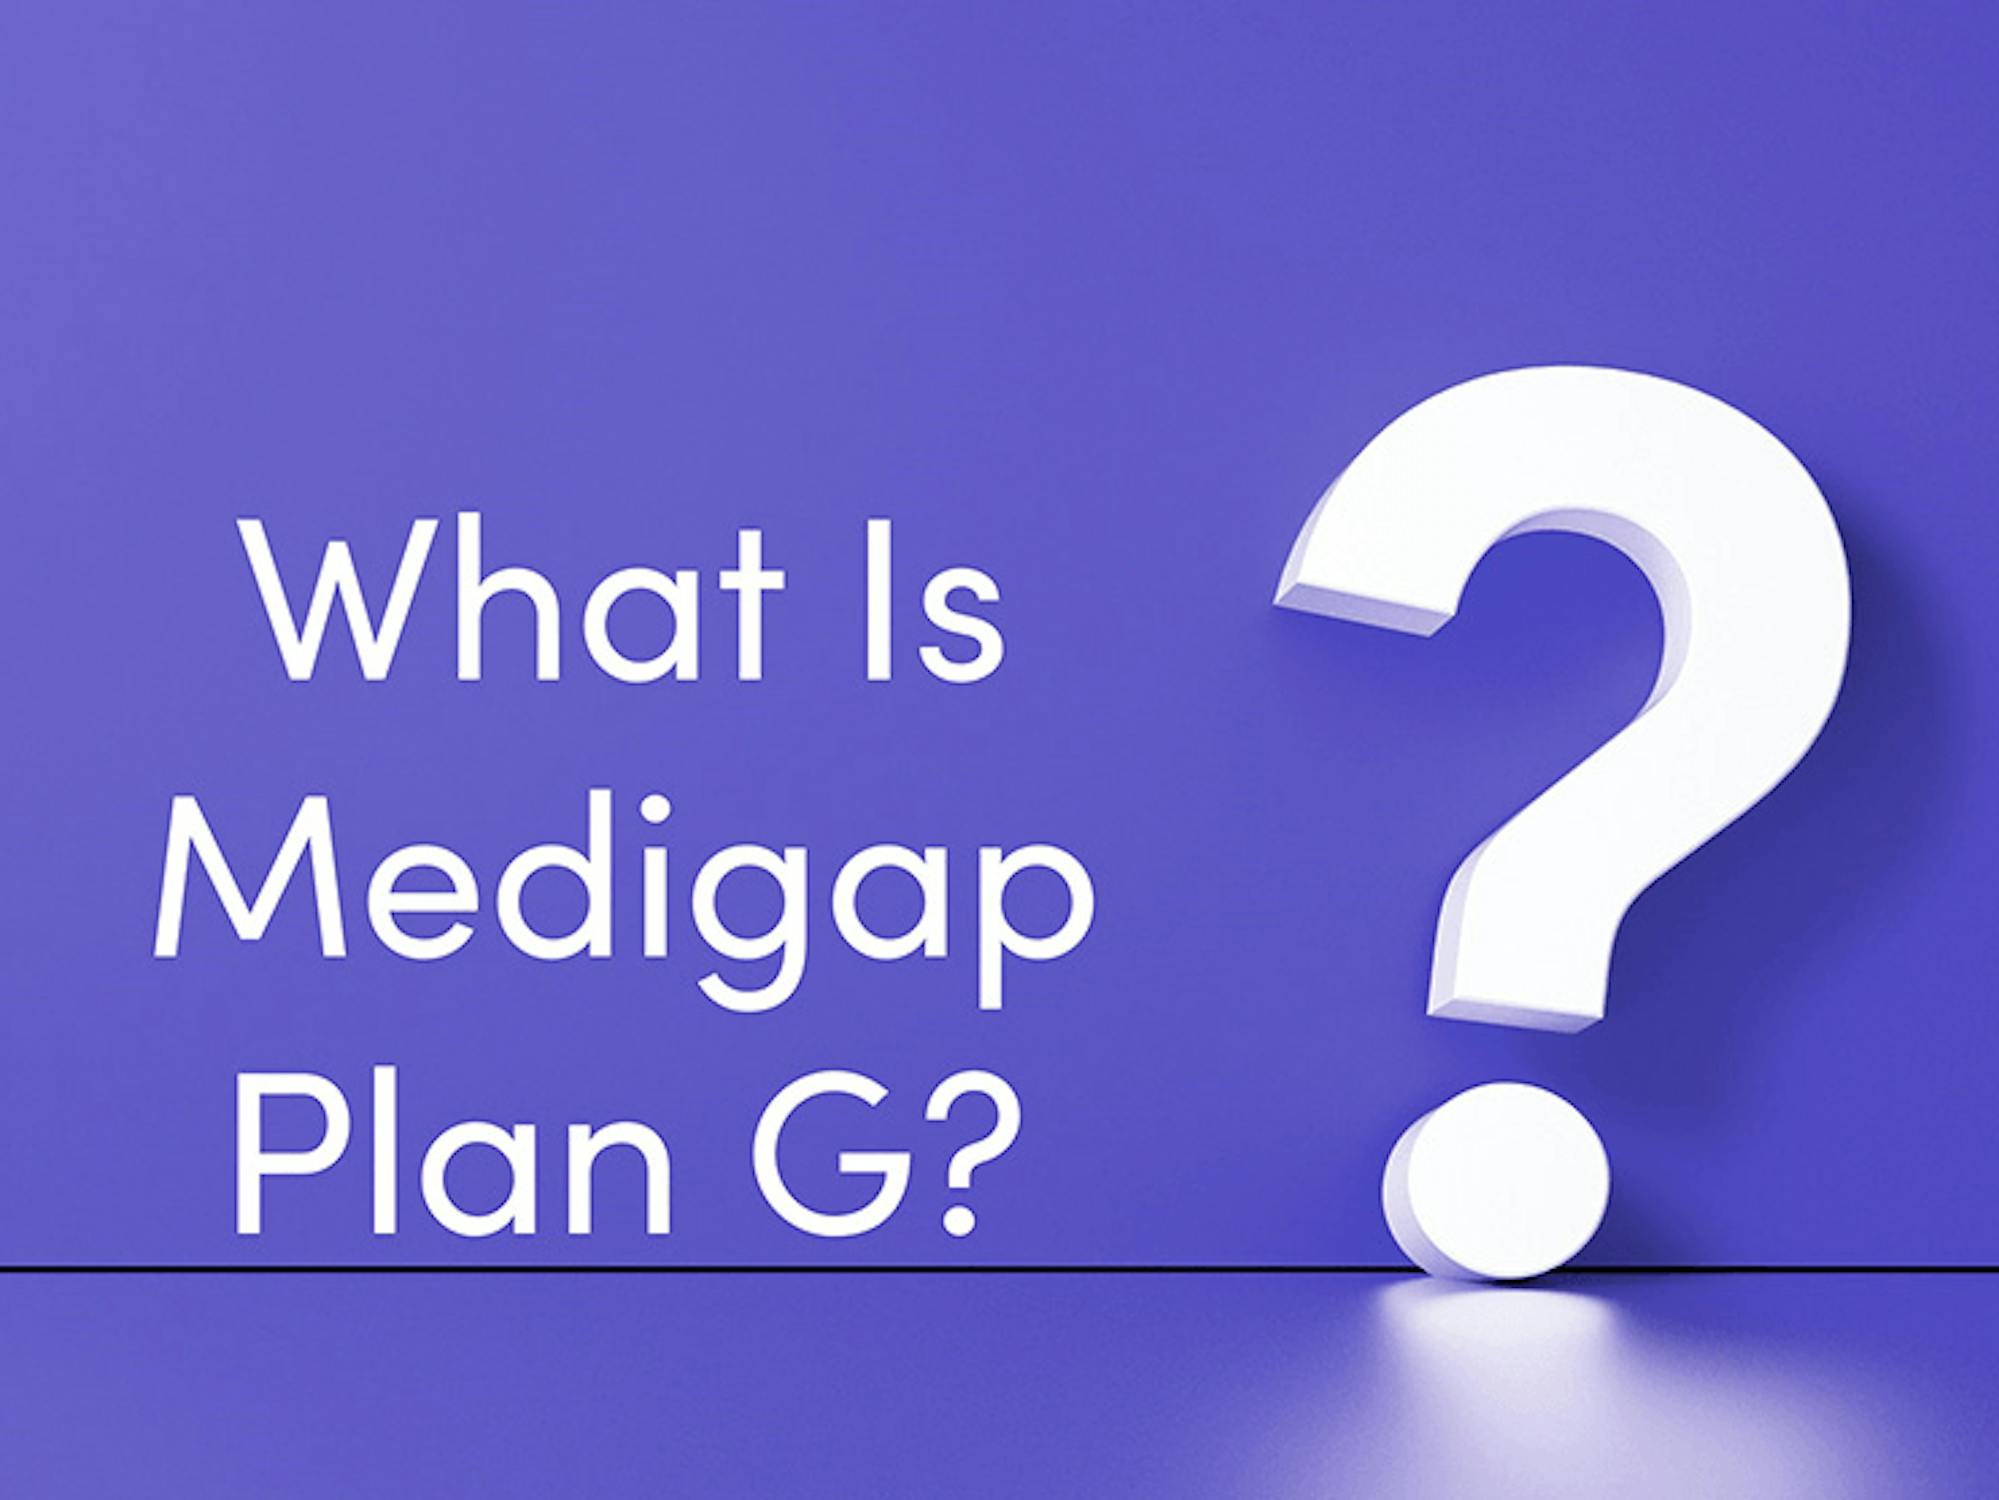 Medigap Plan G ClearMatch Medicare